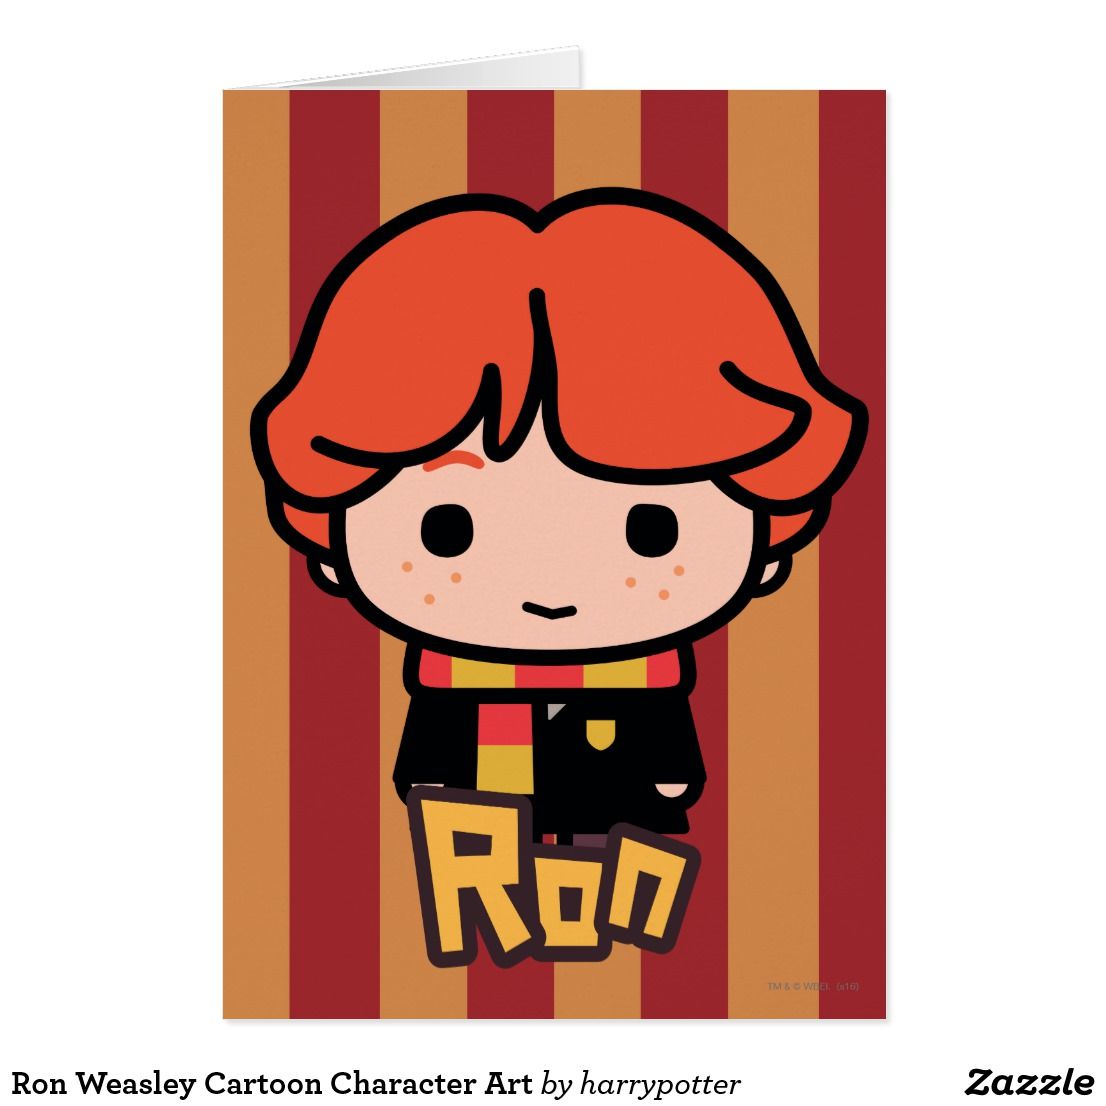 Ron Weasley Cartoon Character Art. Zazzle.com. Ron weasley cartoon, Character art, Cartoon